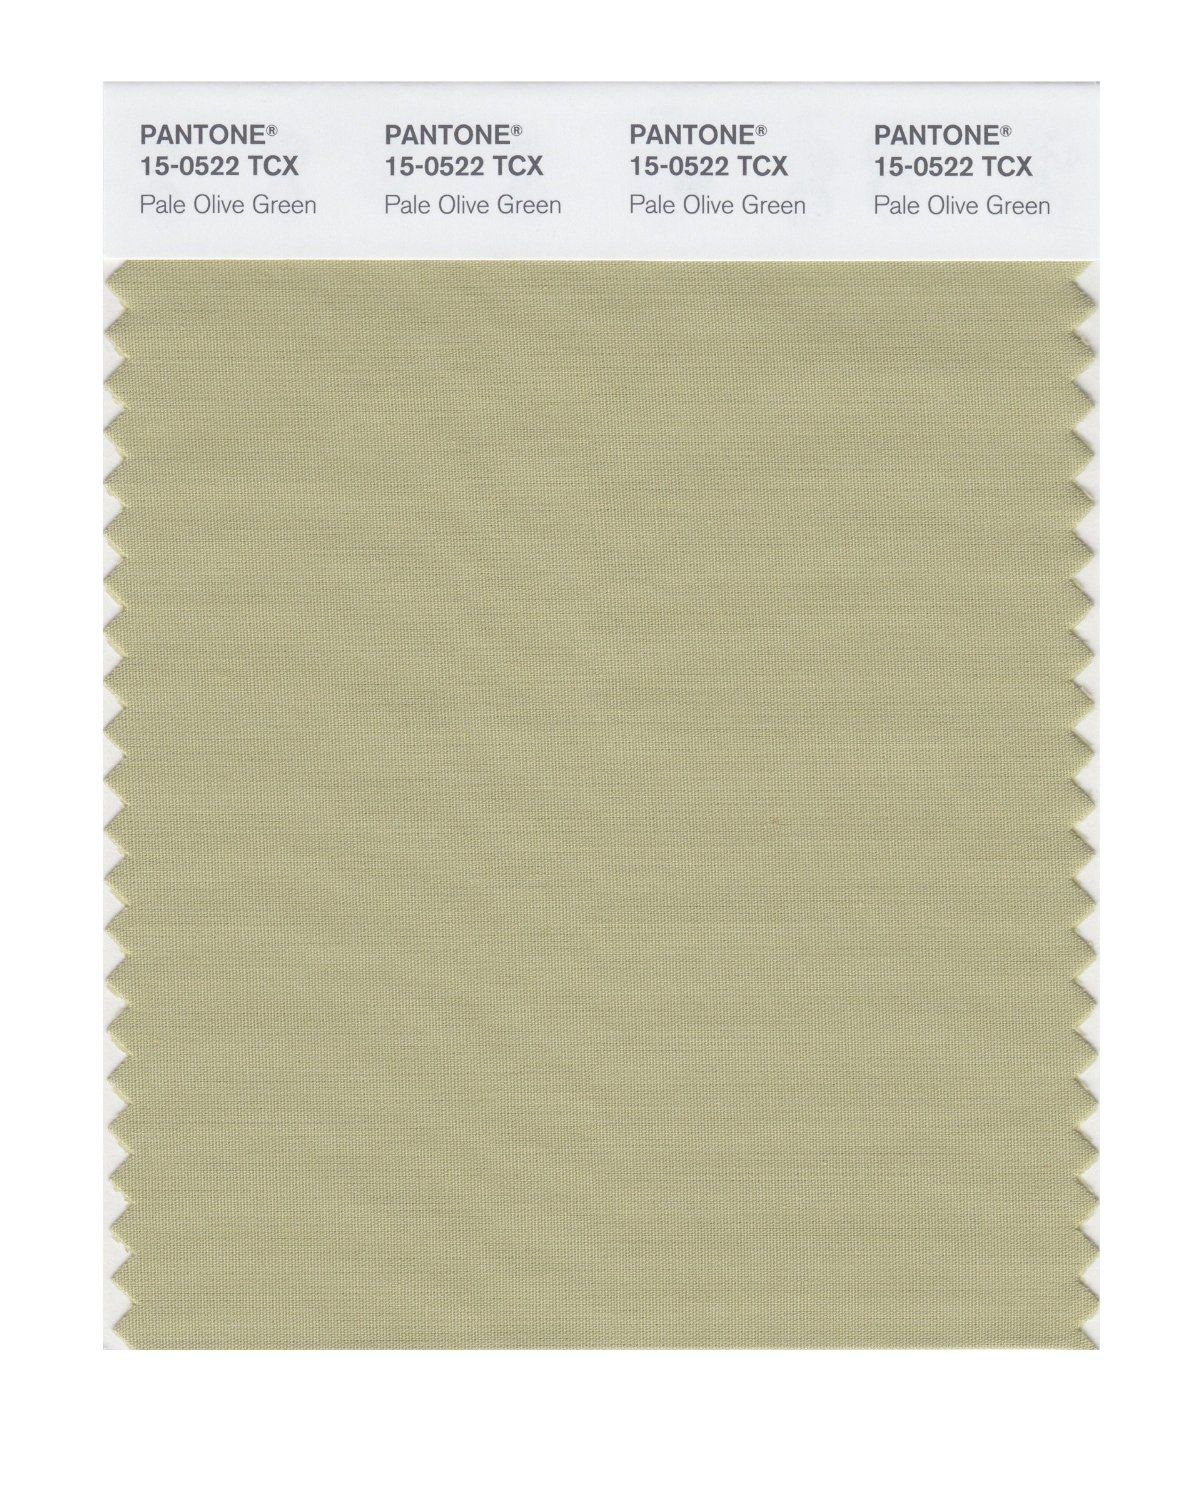 Pantone Cotton Swatch 15-0522 Pale Olive Gree